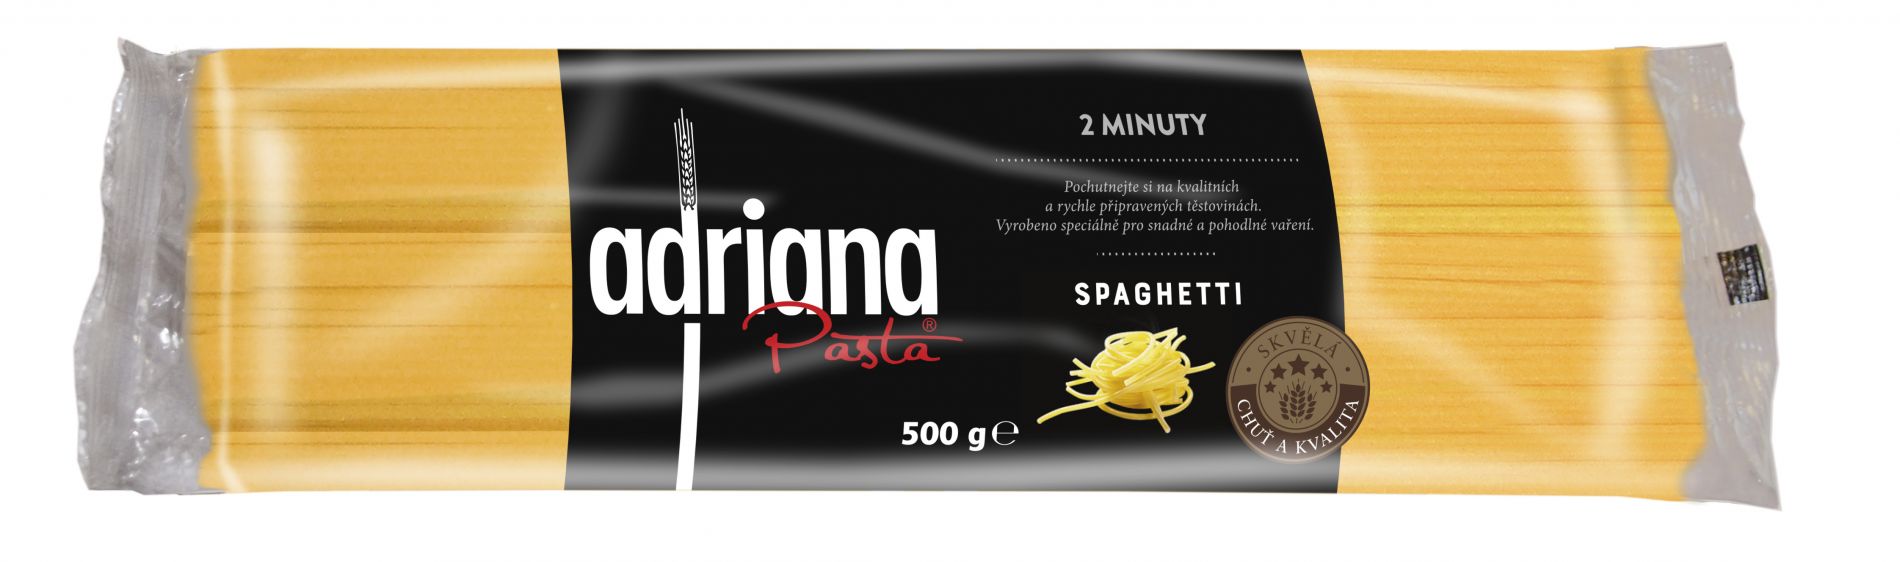 adriana_spaghetti_2minuty